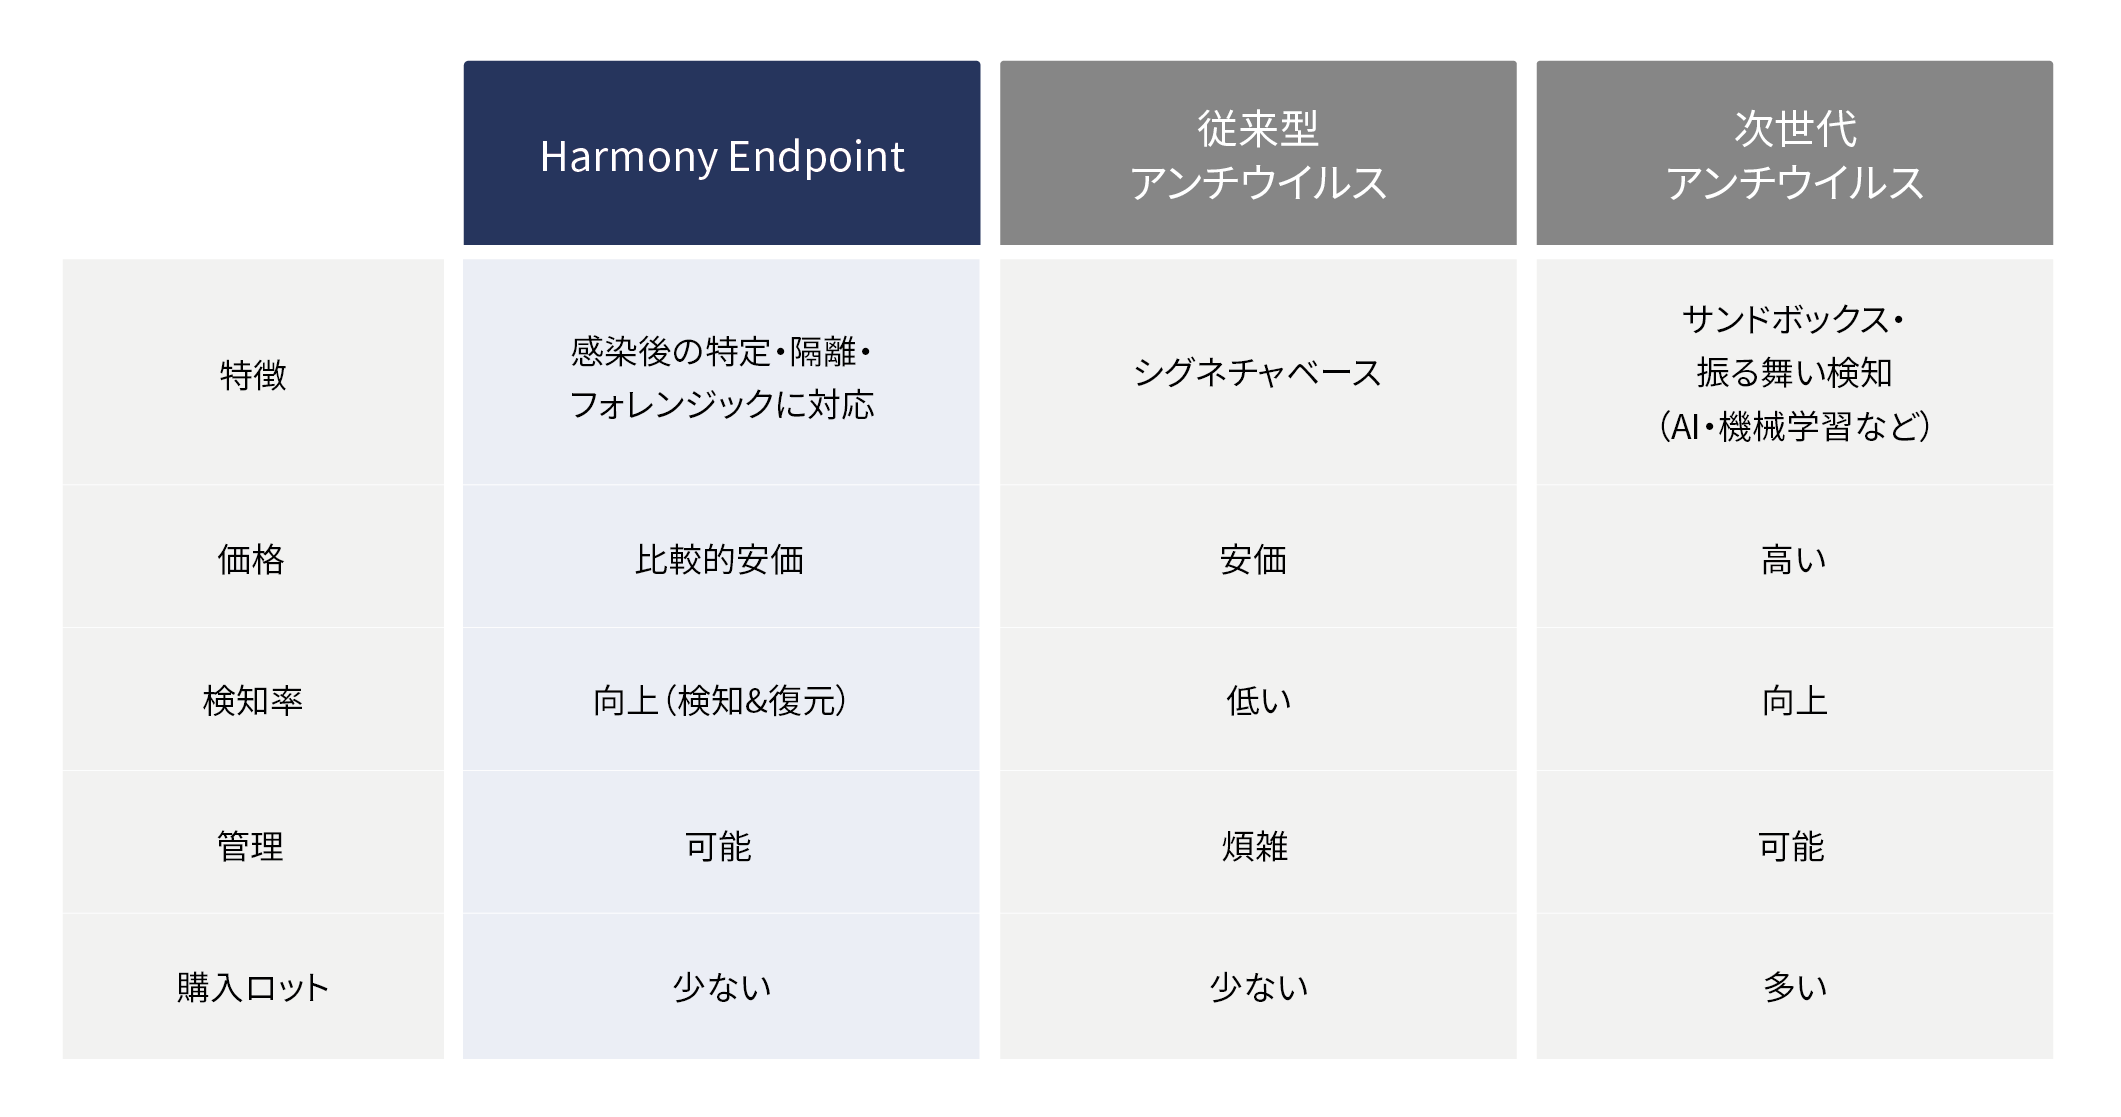 Harmony Endpoint とと、他のソフトの比較表